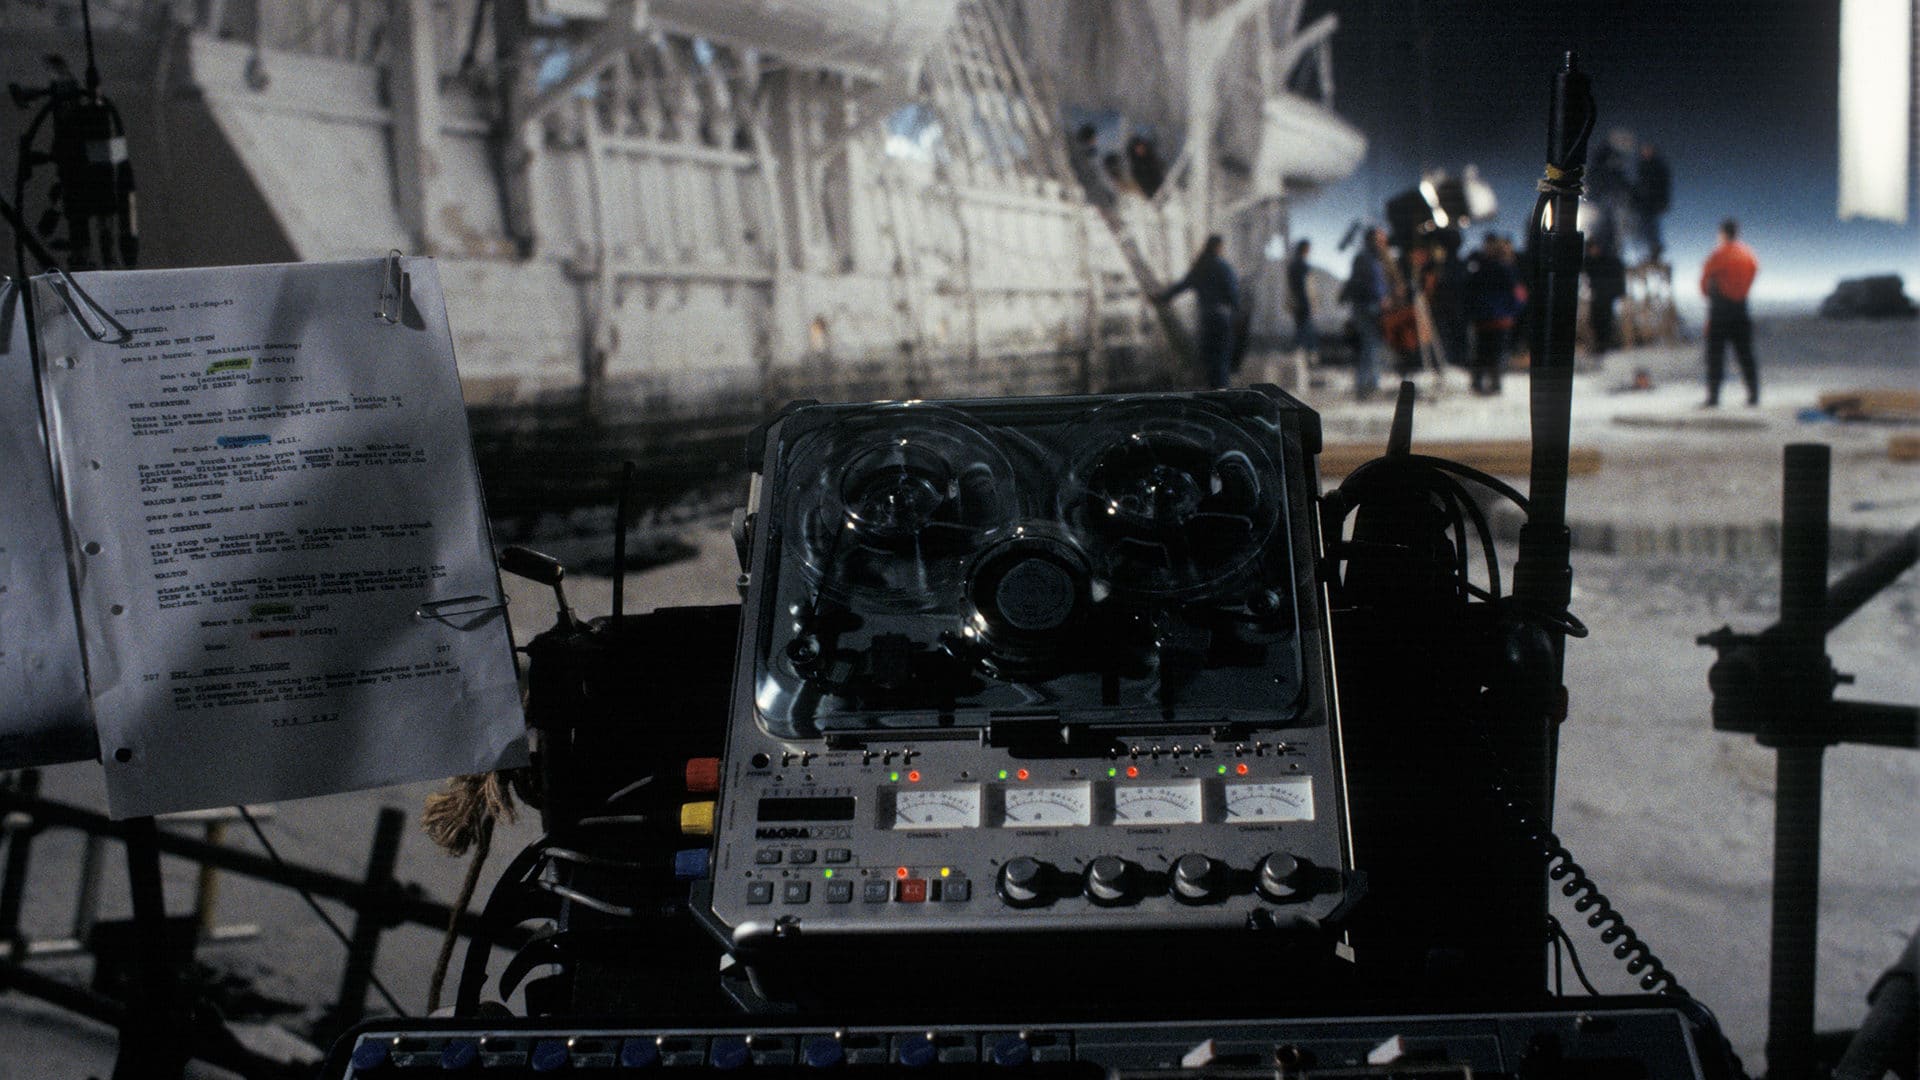 1992-NAGRA D Multi-channel digital audio recorder movie cinema